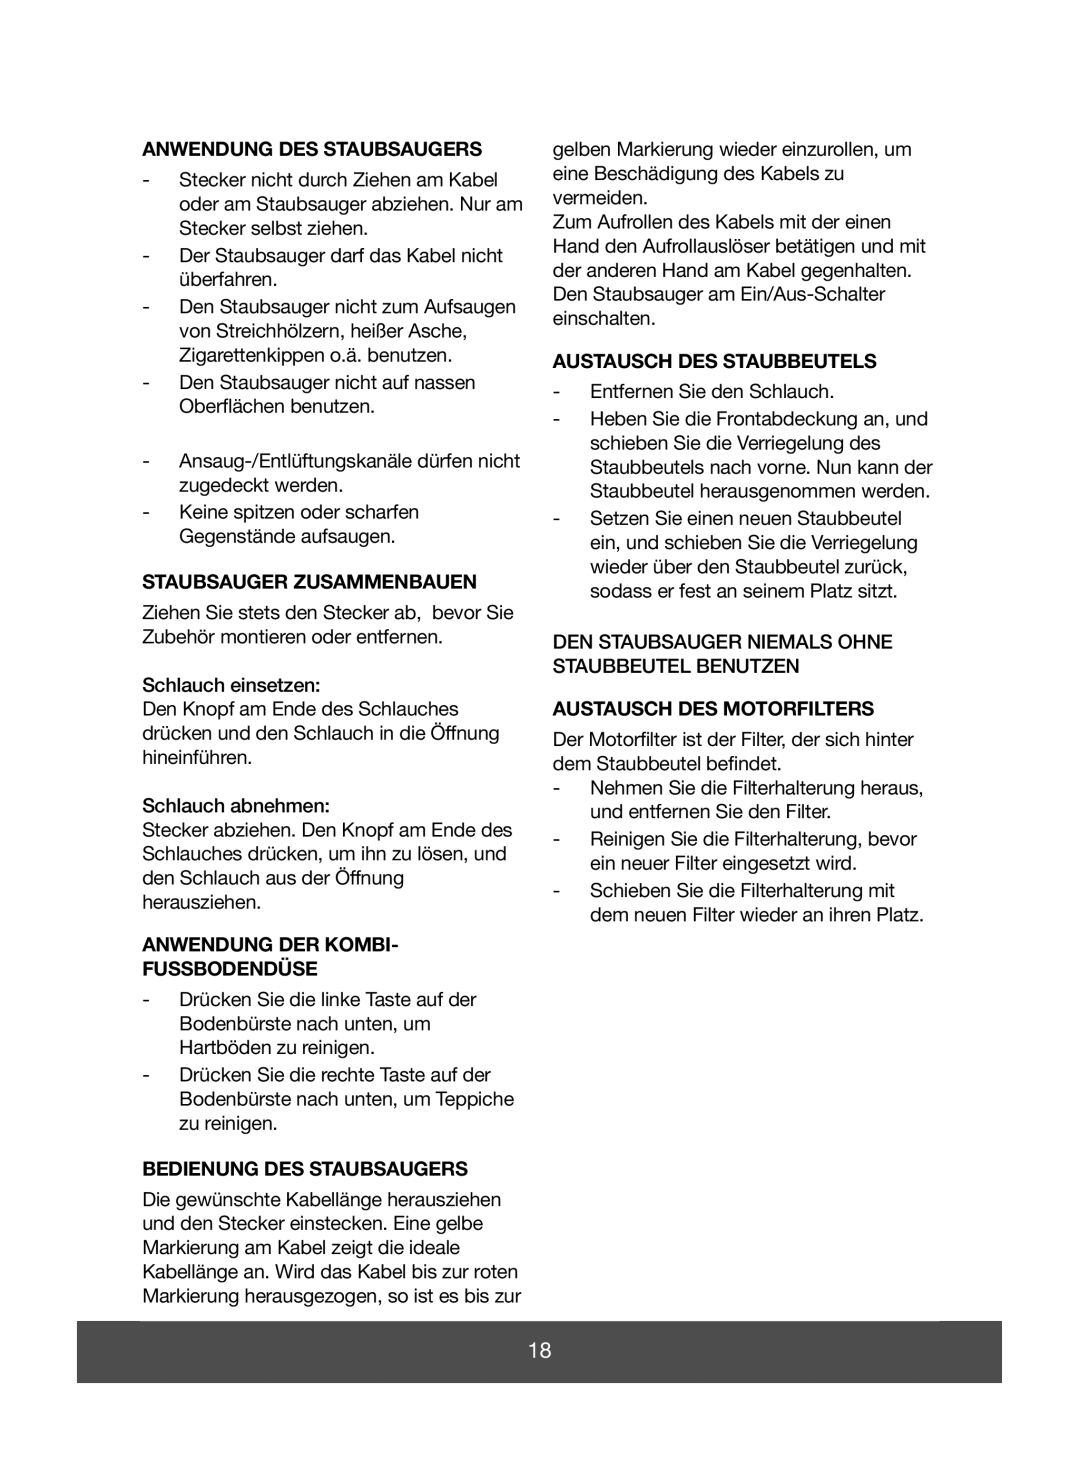 Melissa 640-051 manual Anwendung Des Staubsaugers, Staubsauger Zusammenbauen, Anwendung Der Kombi Fussbodendüse 